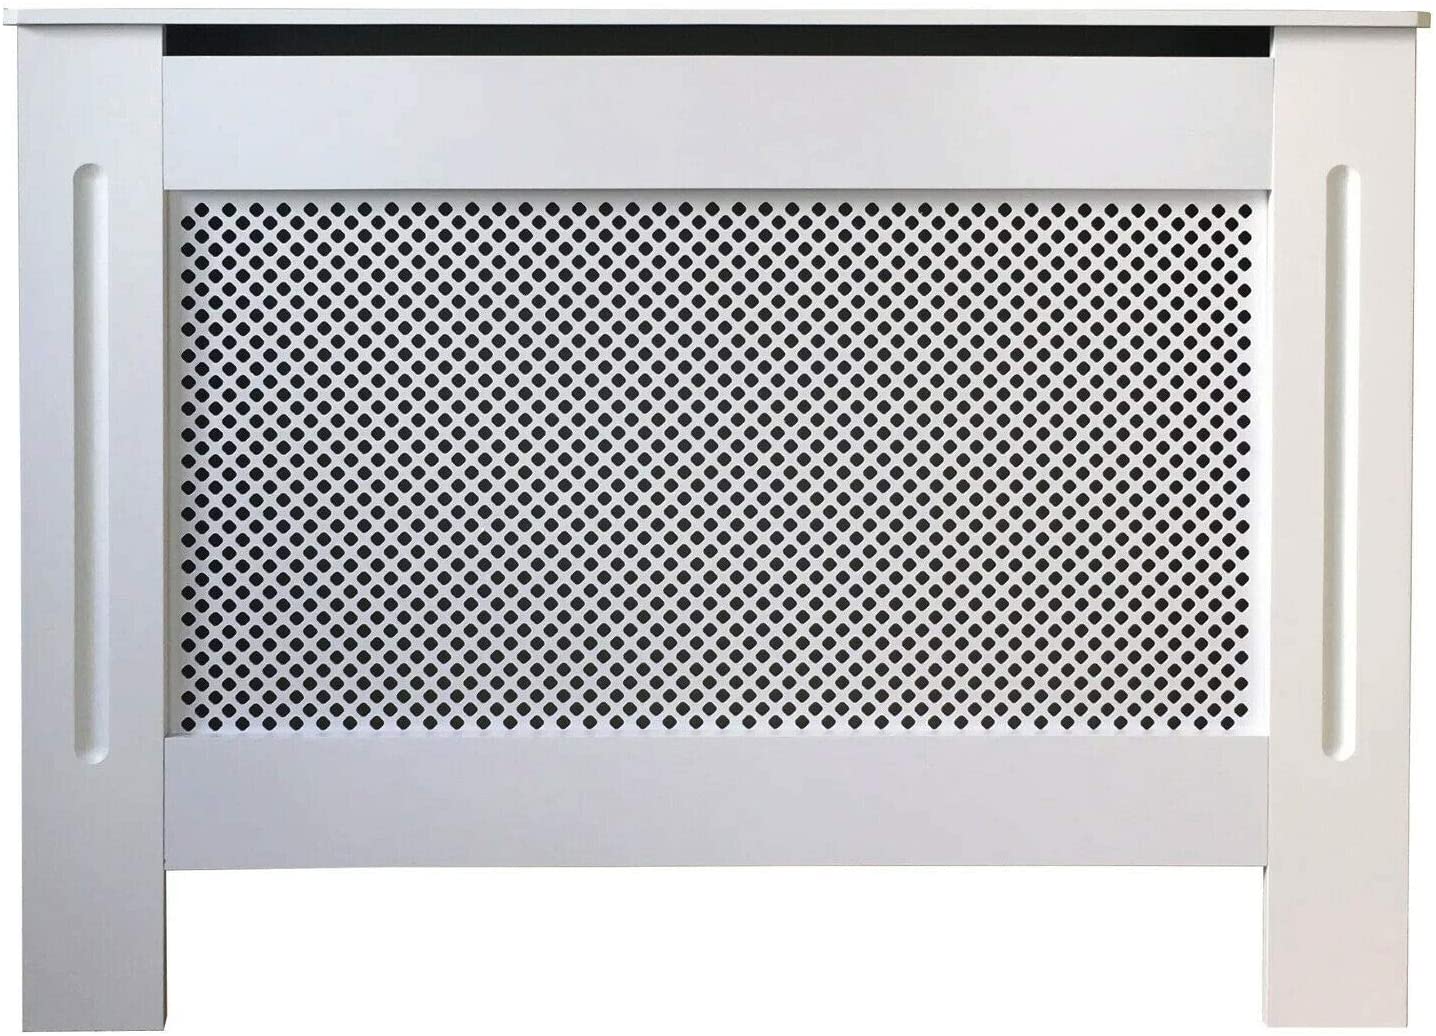 HYGRAD® Modern Radiator Cover Wall Cabinet Wood MDF Grill Shelf Traditional Furniture UK